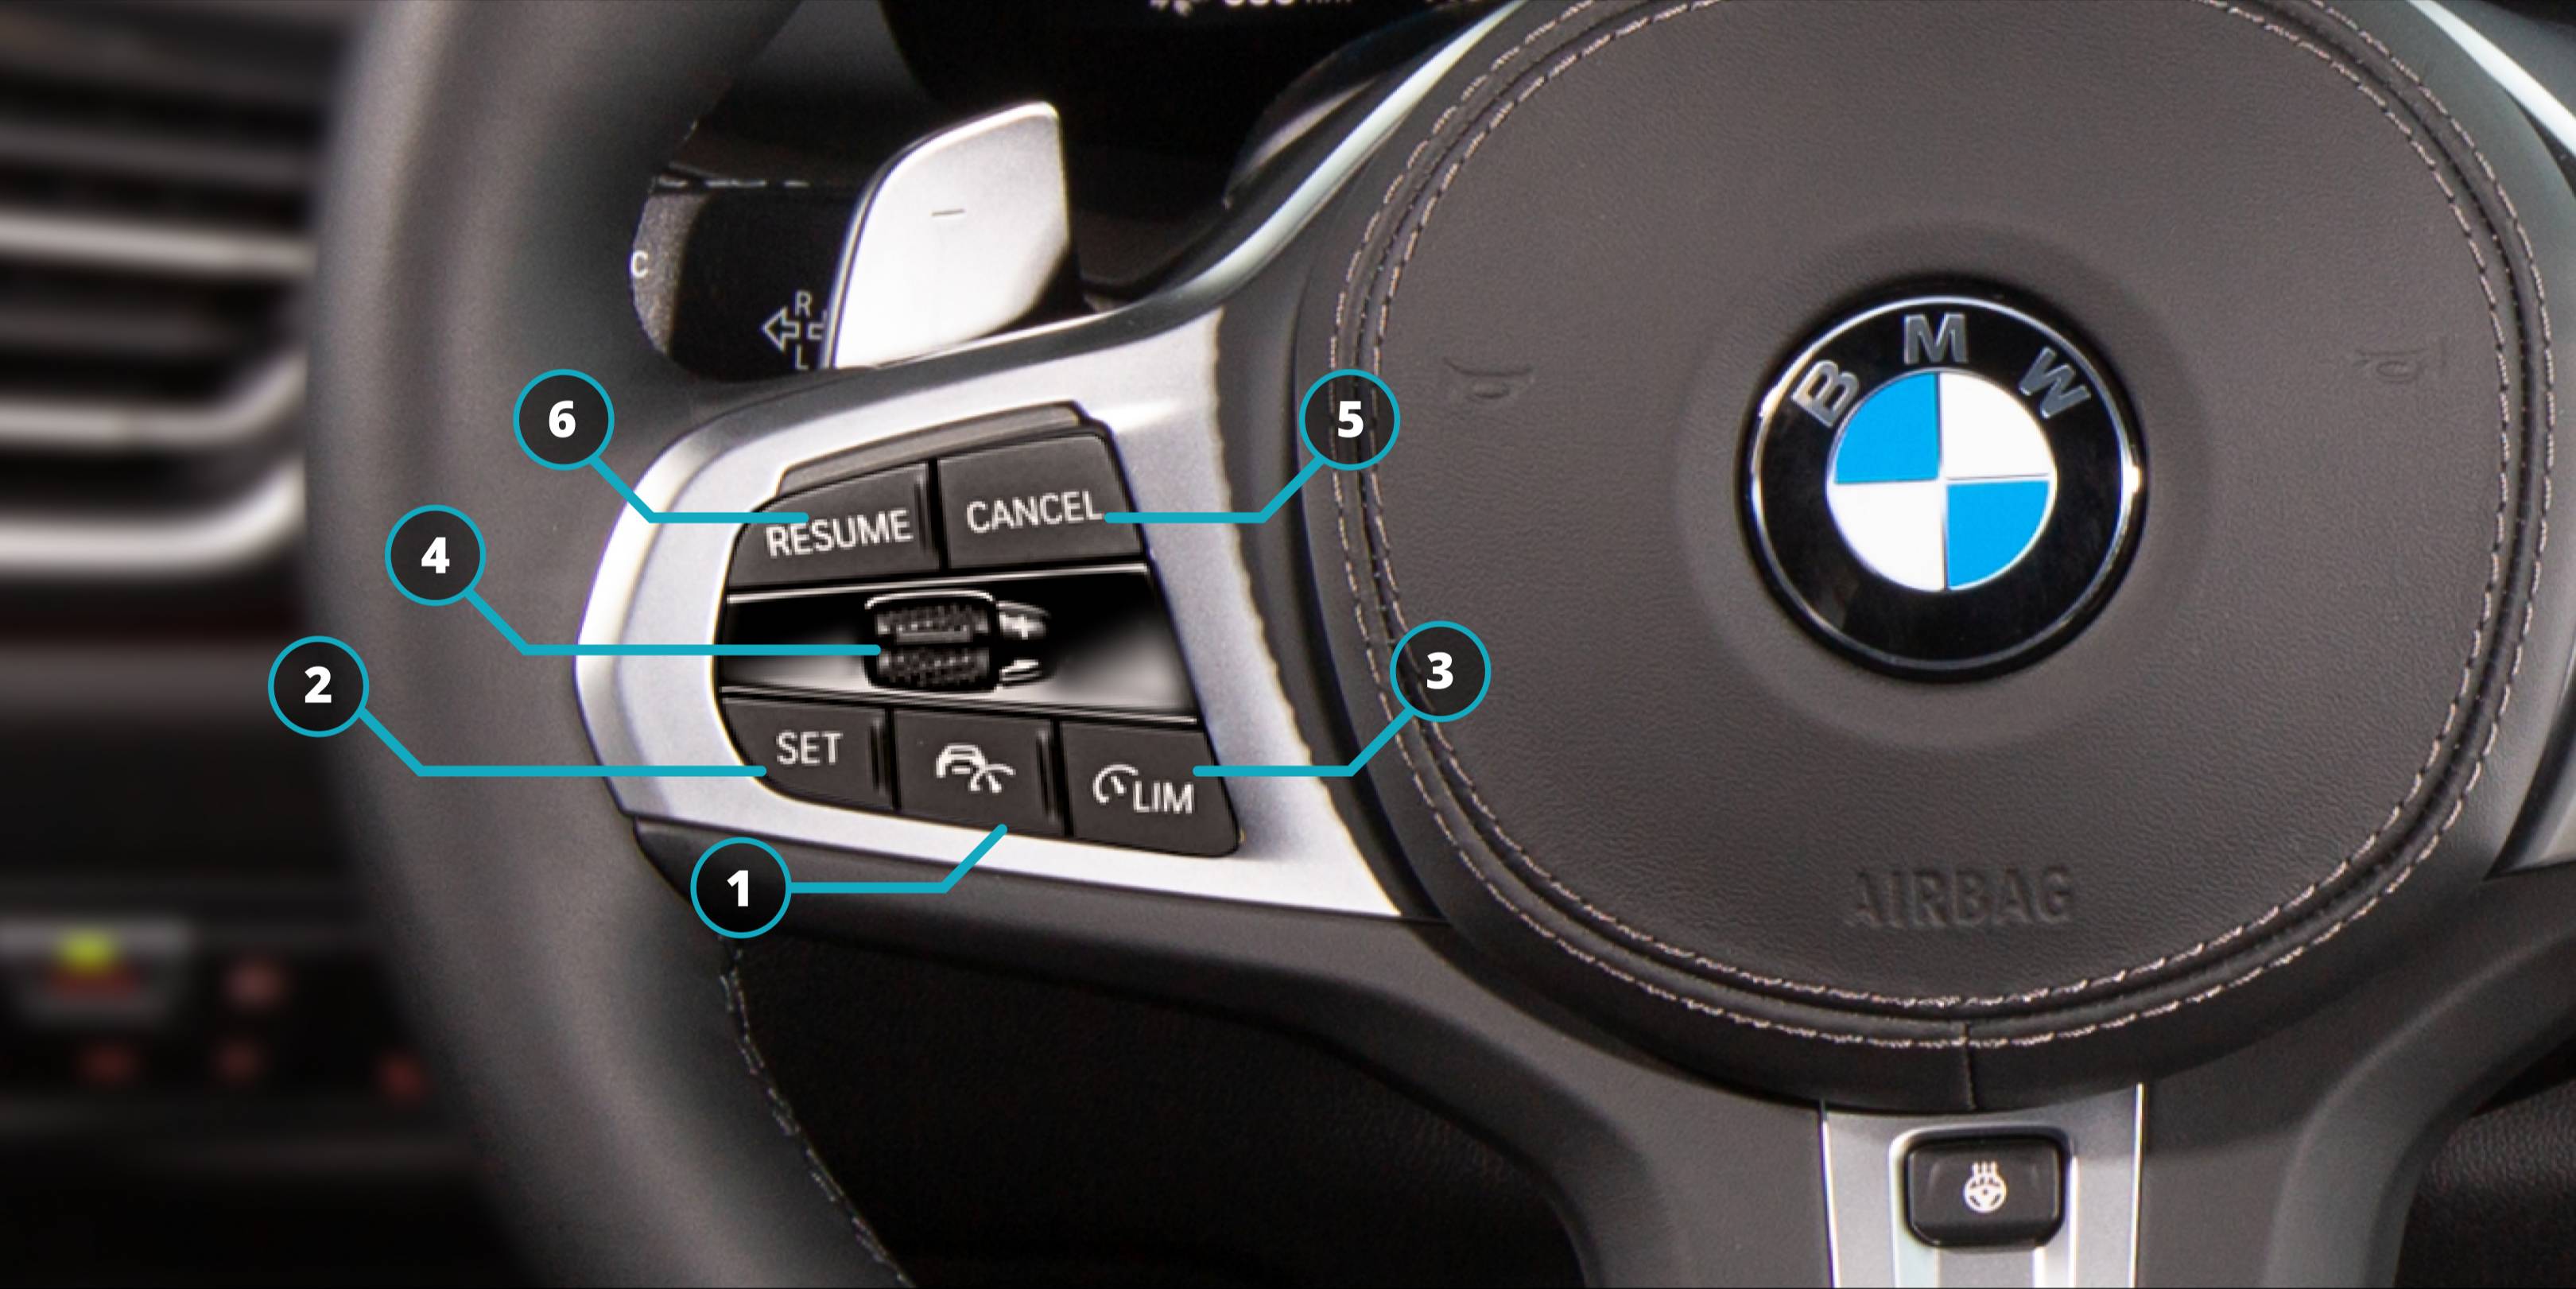 BMW steering wheel Buttons Explained BimmerTech